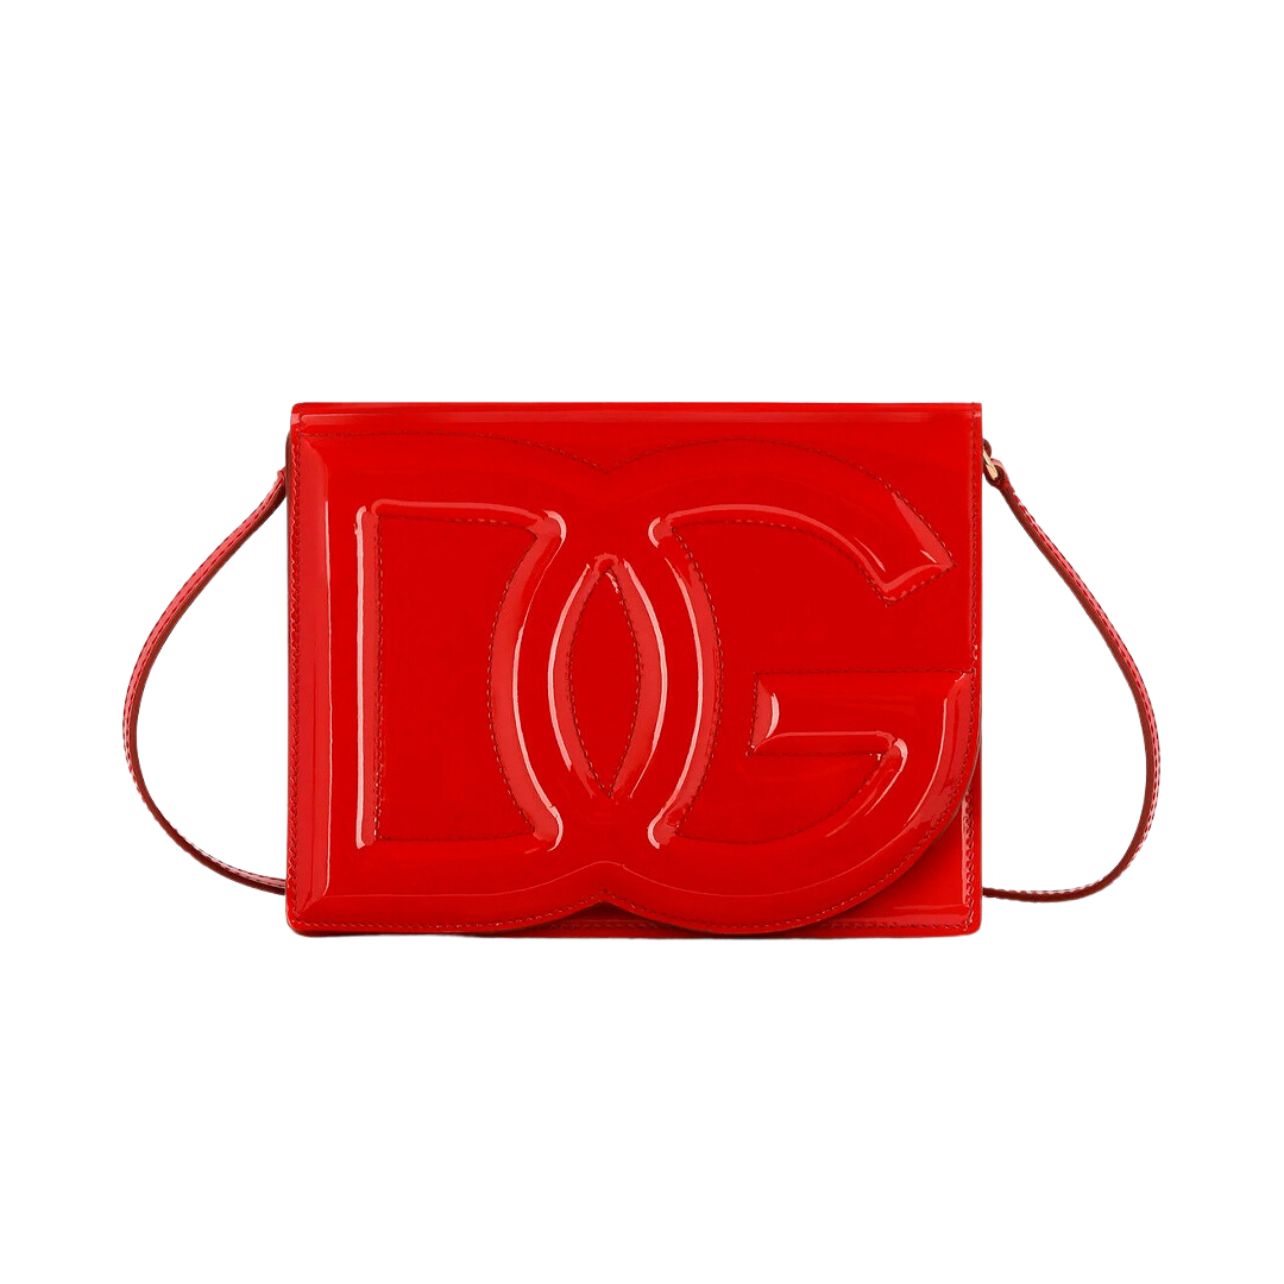 Dolce & Gabbana calfskin leather logo shoulder bag in primary red